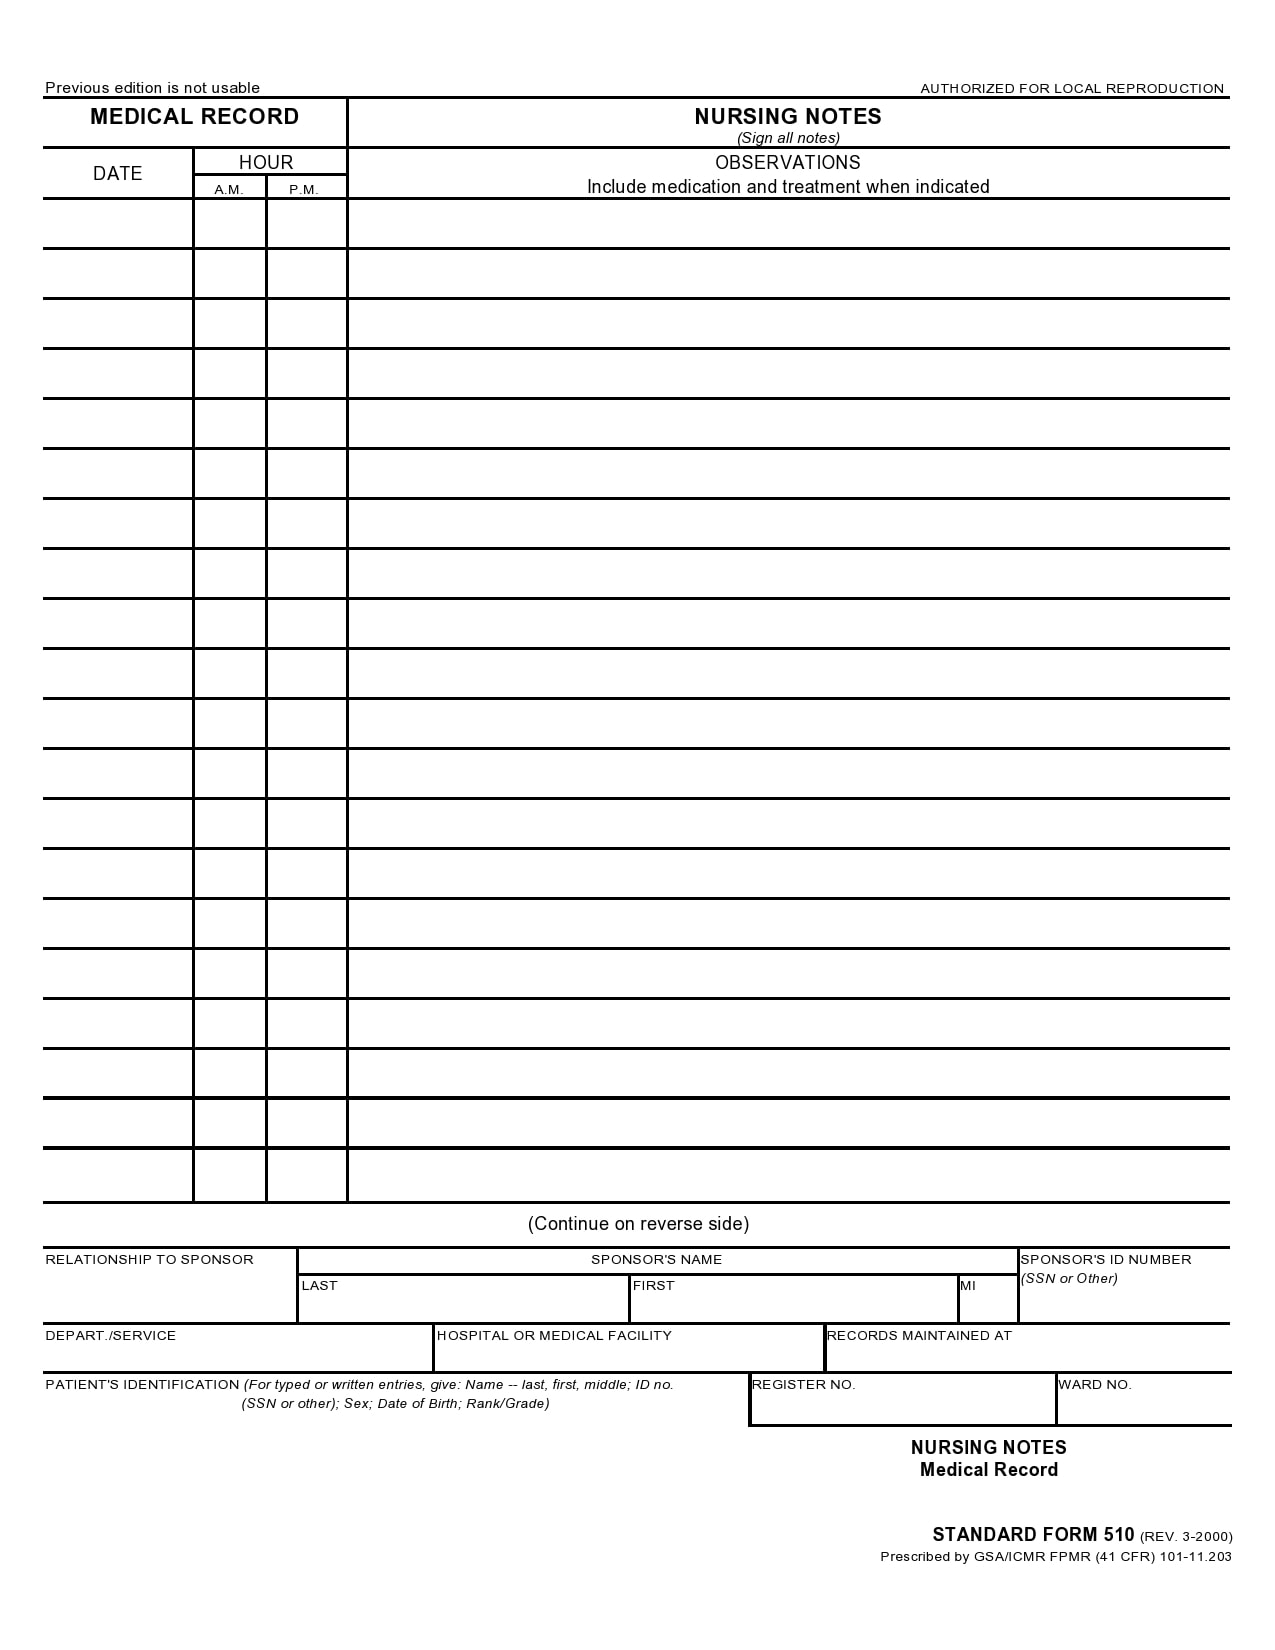 20 Useful Nursing Note Samples (+Templates) - TemplateArchive Regarding Nursing Home Physician Progress Note Template